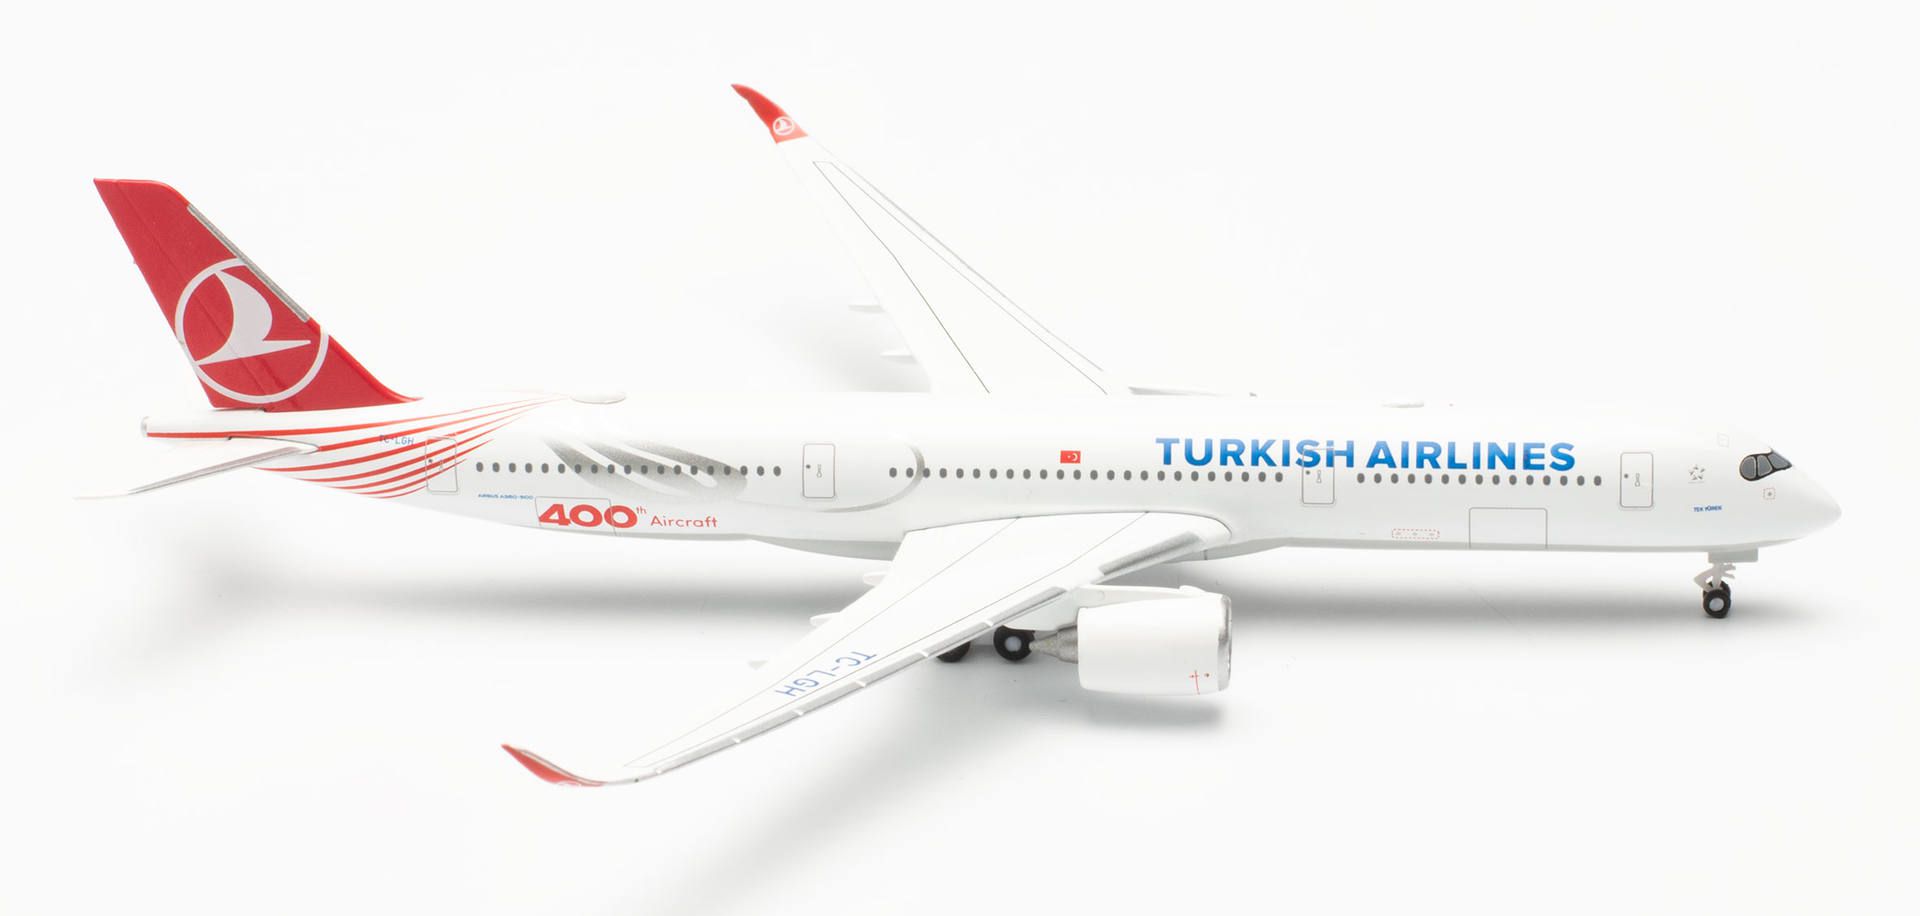 Herpa 537230 - Turkish Airlines Airbus A350-900 "400th Aircraft" - TC-LGH "Tek Yürek"